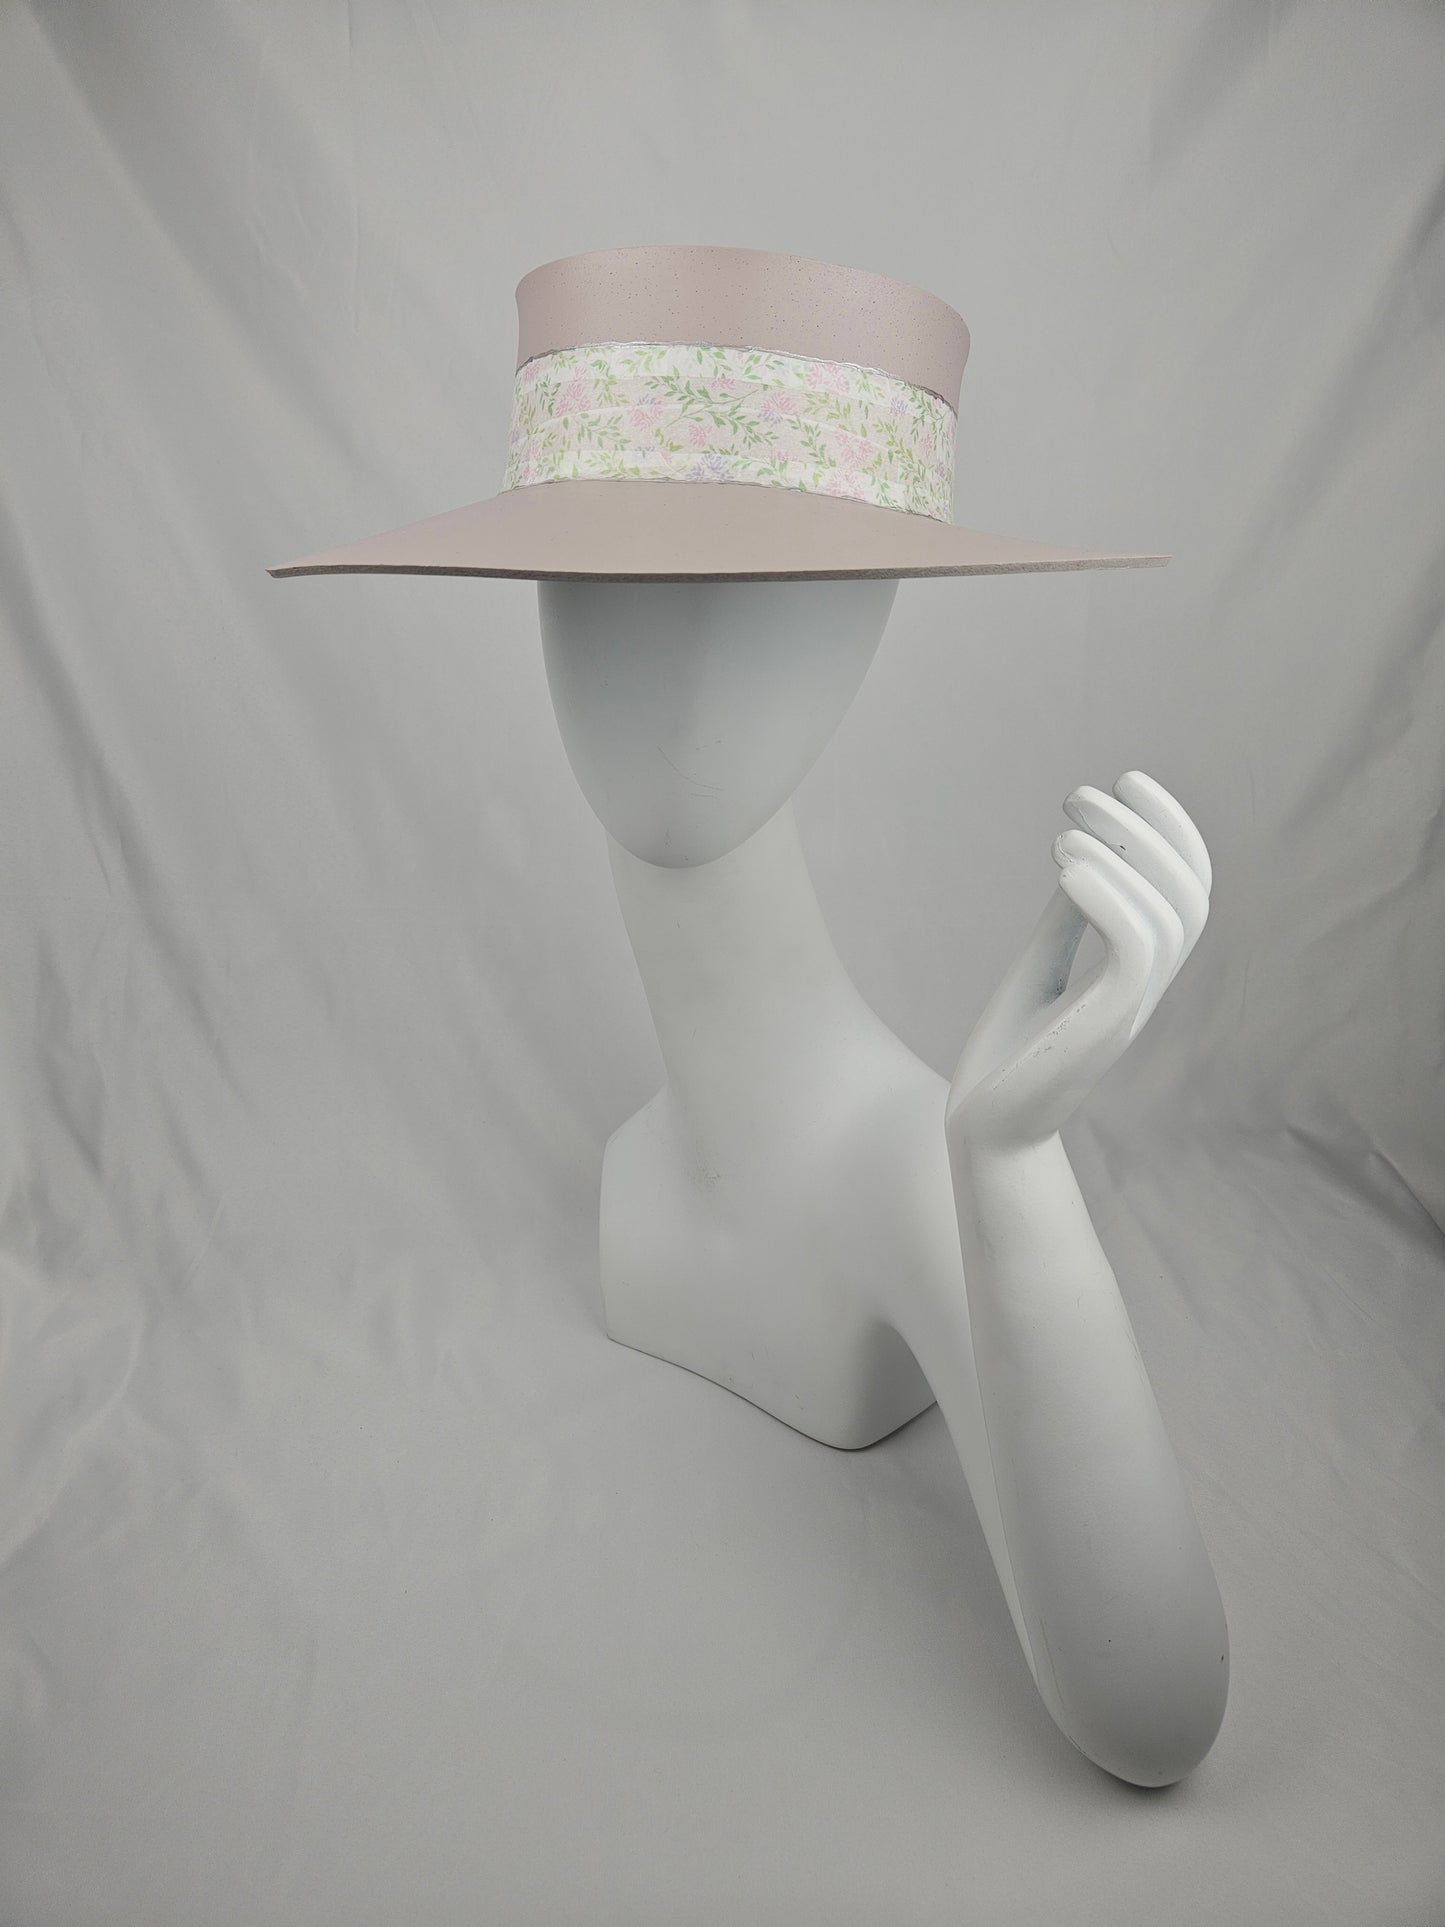 Tall Soft Pink Audrey Sun Visor Hat with Pastel Floral Band: 1950s, Walks, Brunch, Asian, Golf, Easter, Church, No Headache, Derby